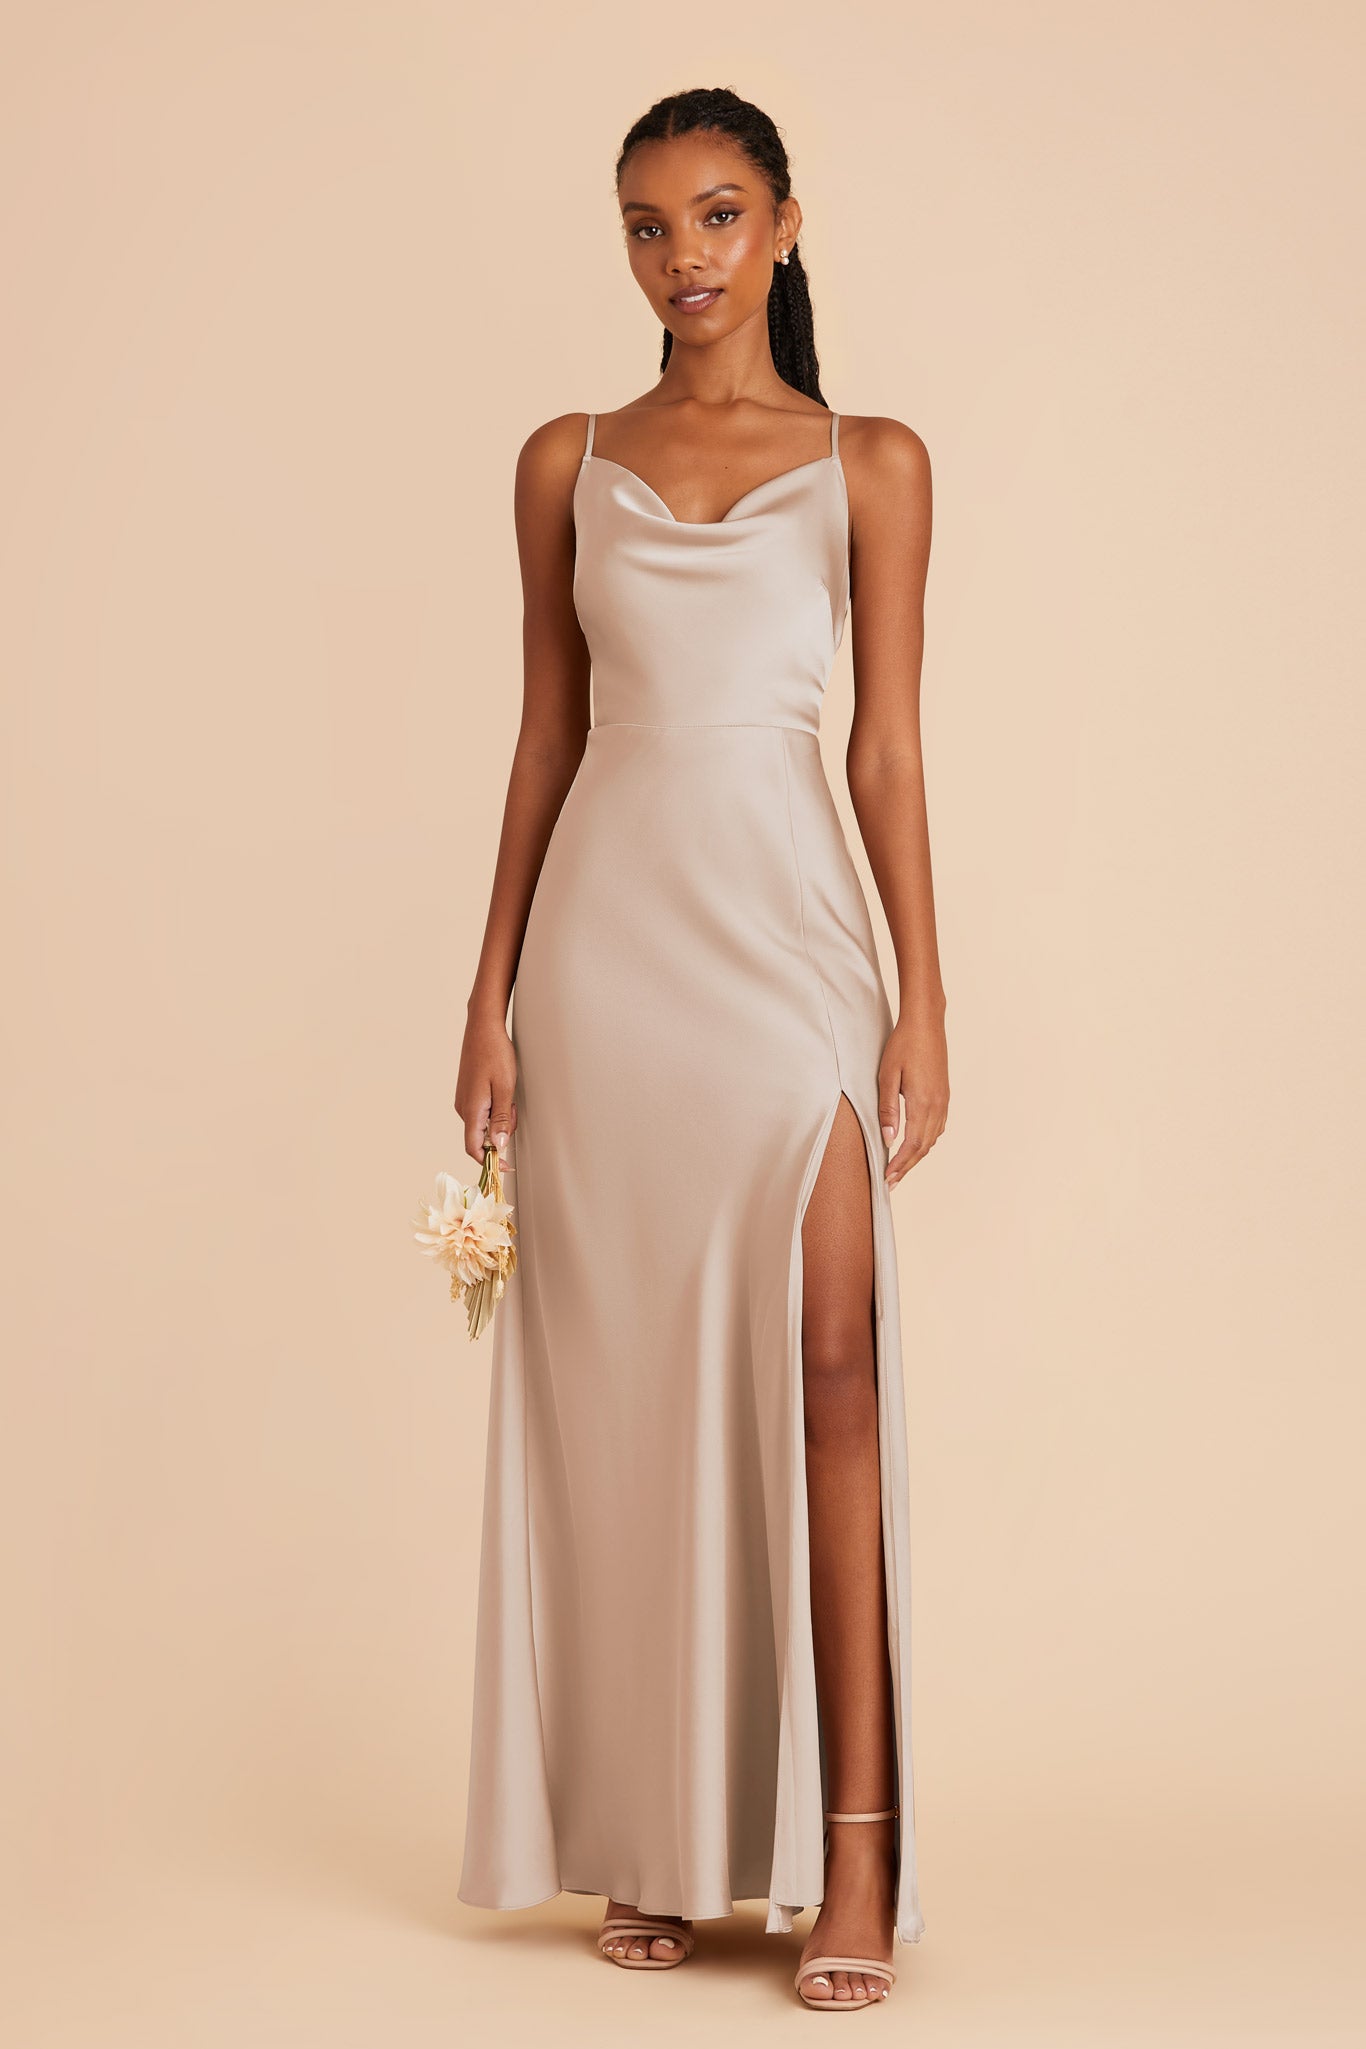 Beige Floor Length Bridesmaid Dress Convertible Bridesmaid Dress